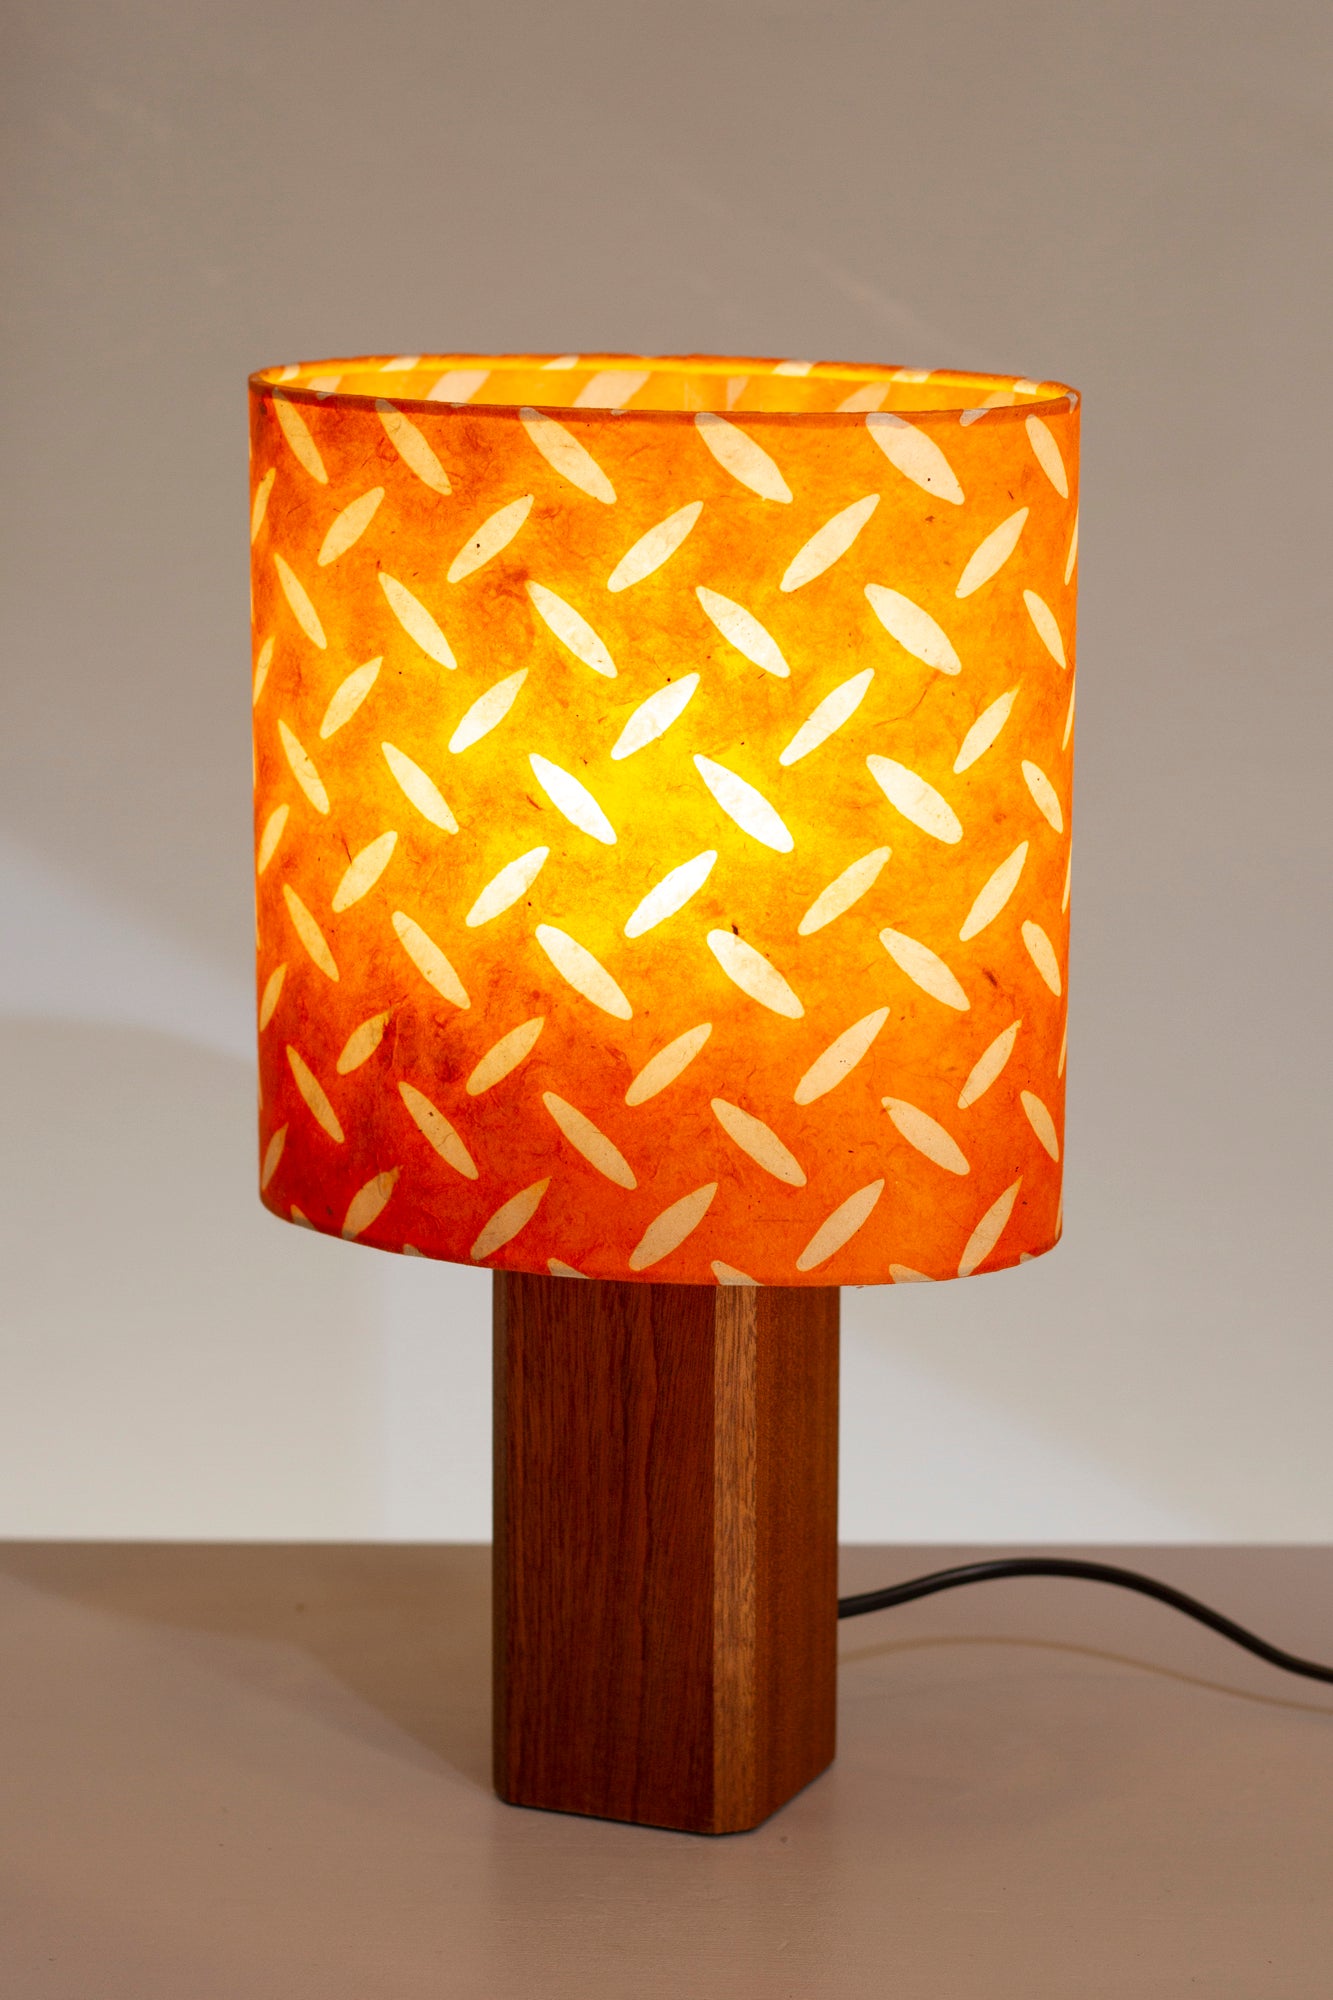 Square Sapele Table Lamp with Oval Lamp Shade P91 - Batik Tread Plate Orange